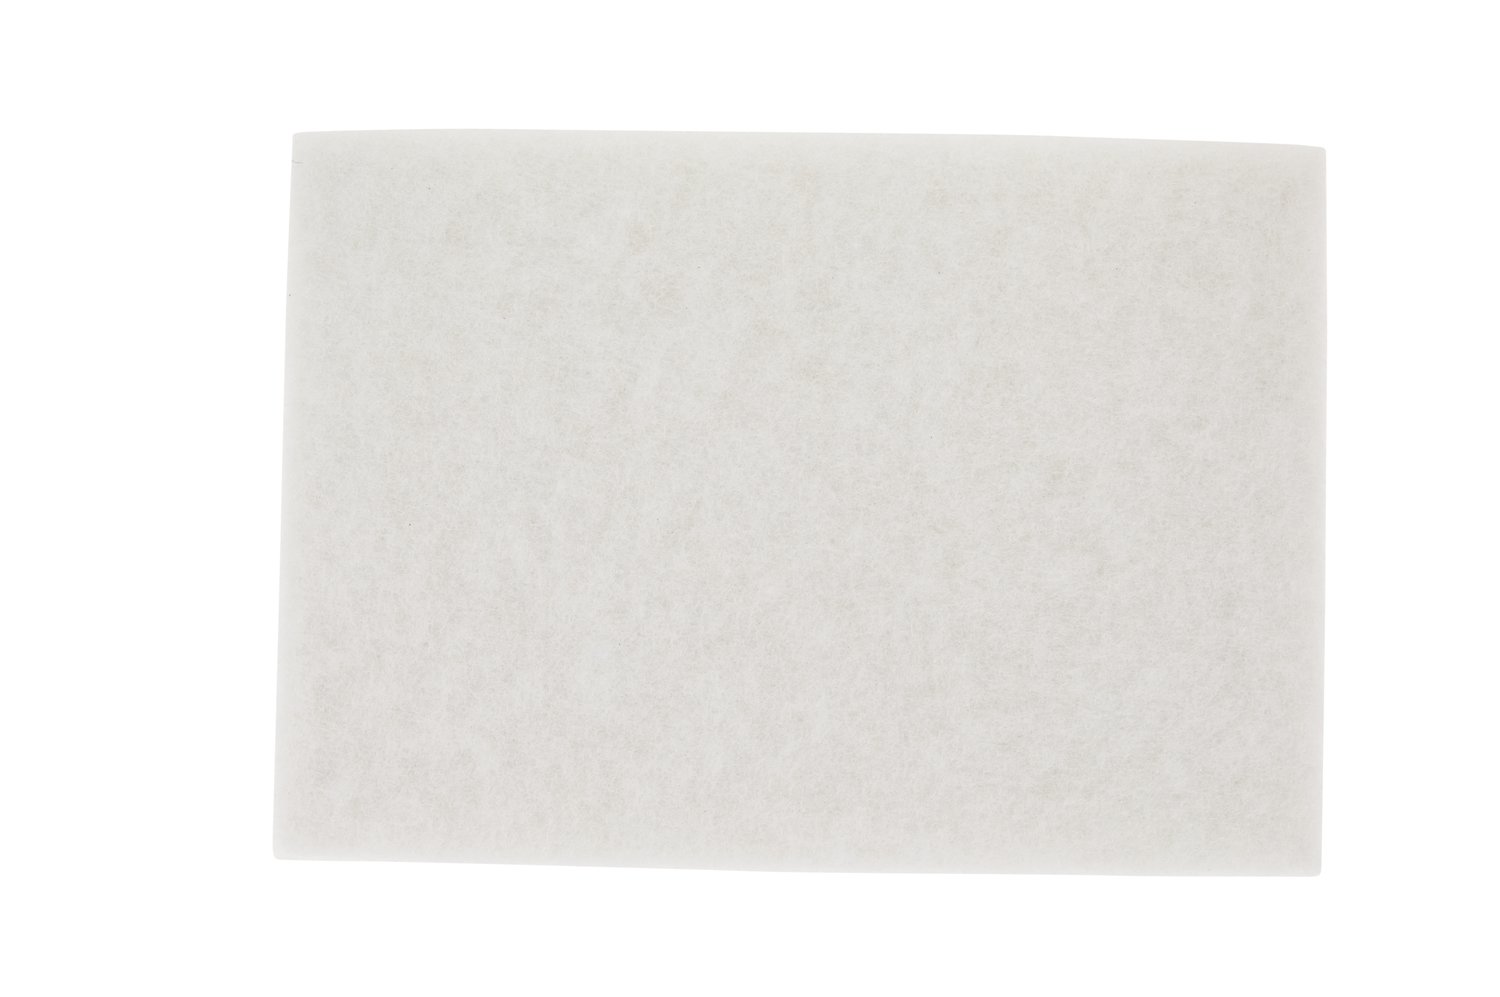 7100119072 - 3M White Super Polish Pad 4100, 12 in x 18 in, 20/Case